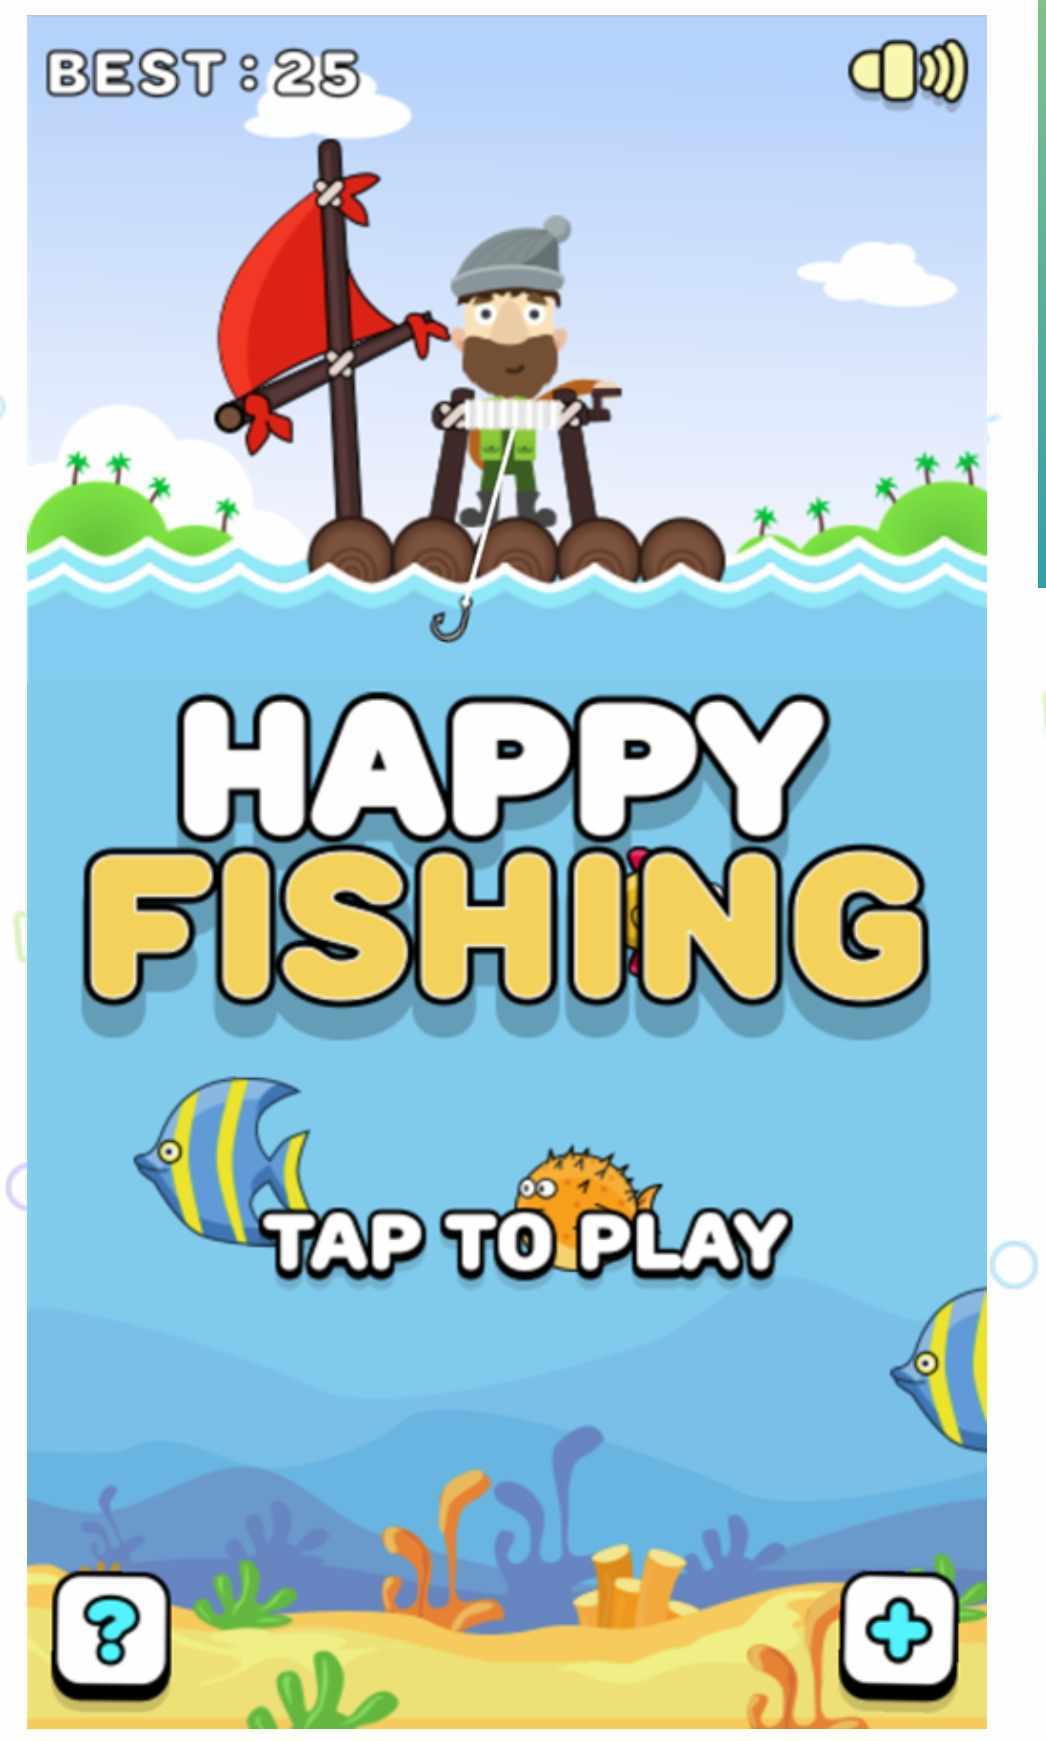 Royal Fish: Fishing Game - Apps on Google Play